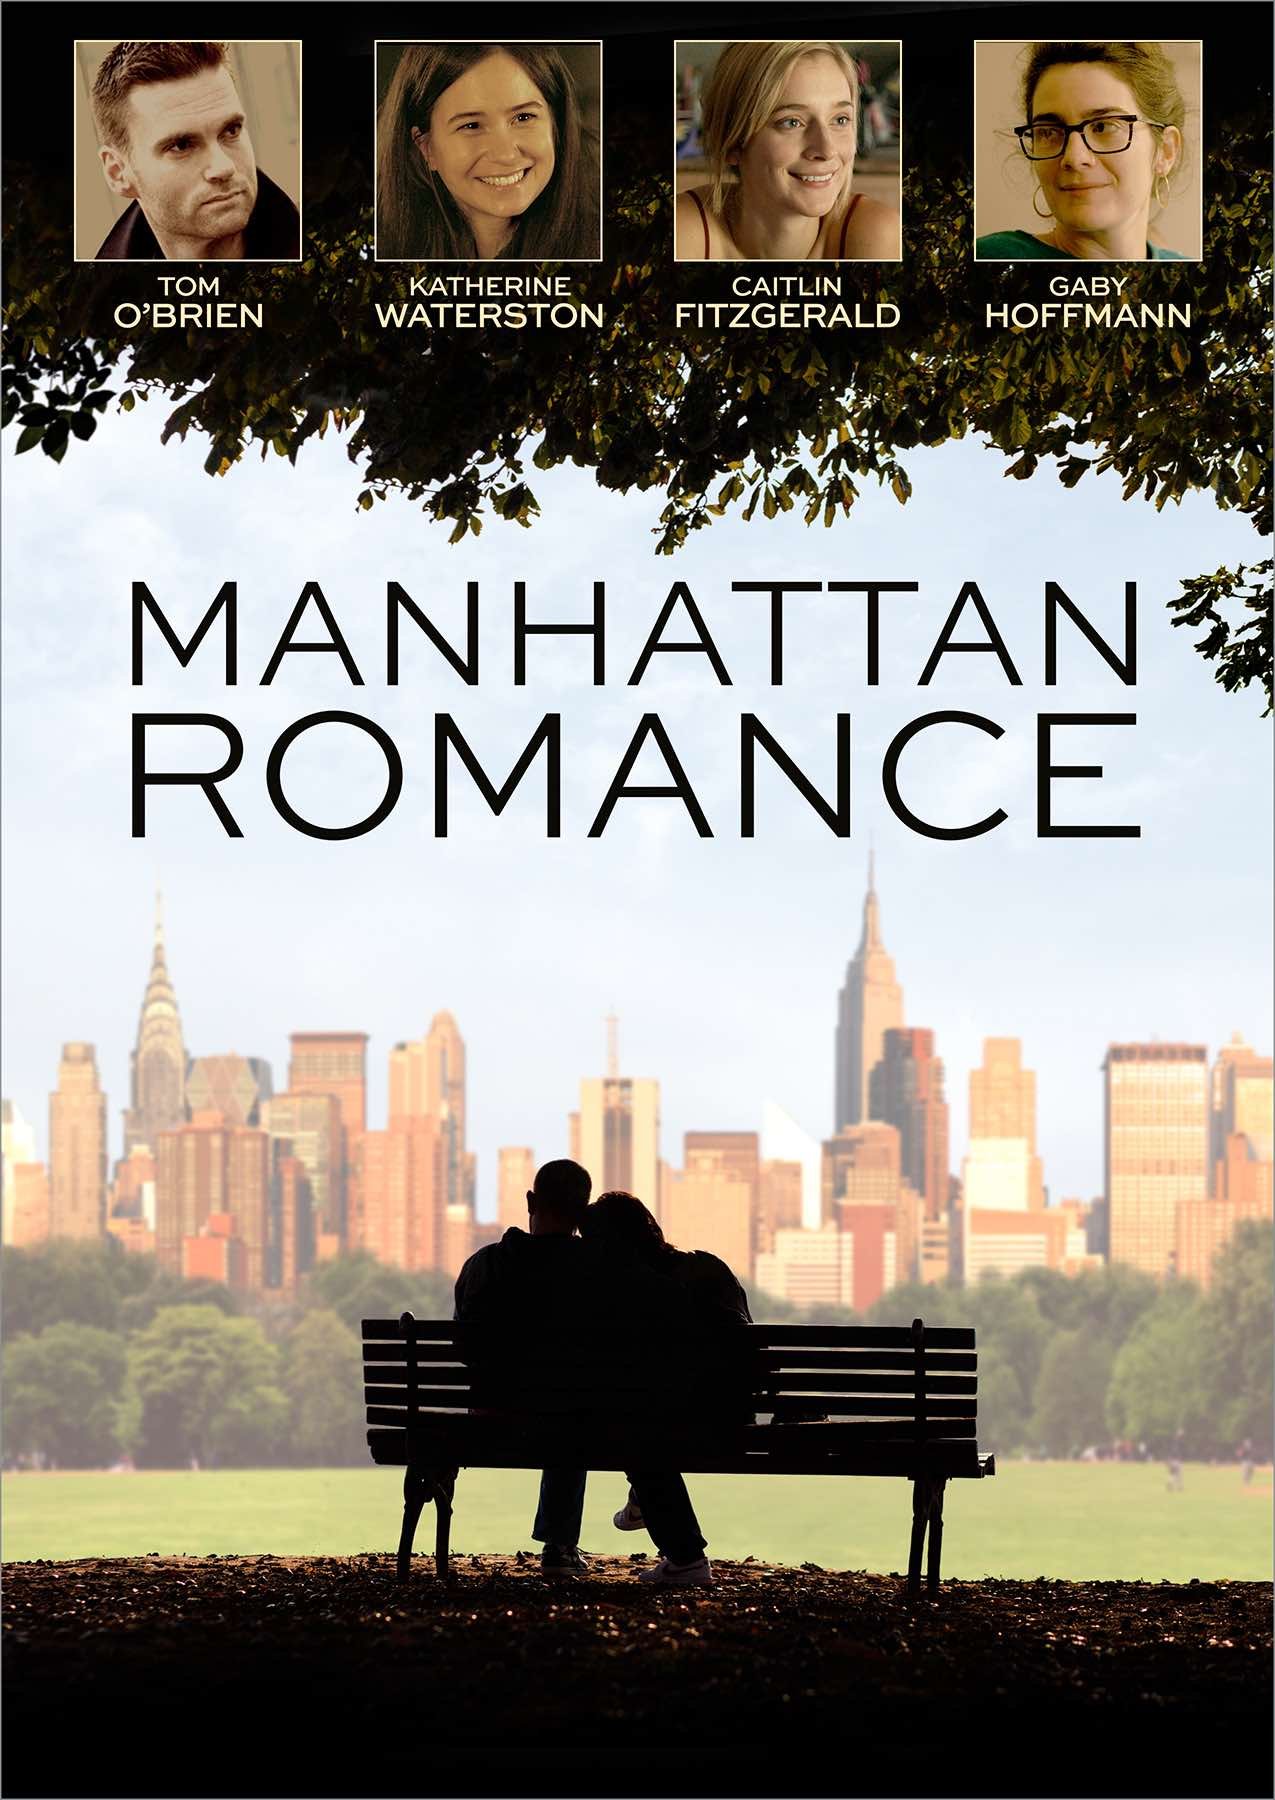 Poster of the movie Manhattan Romance